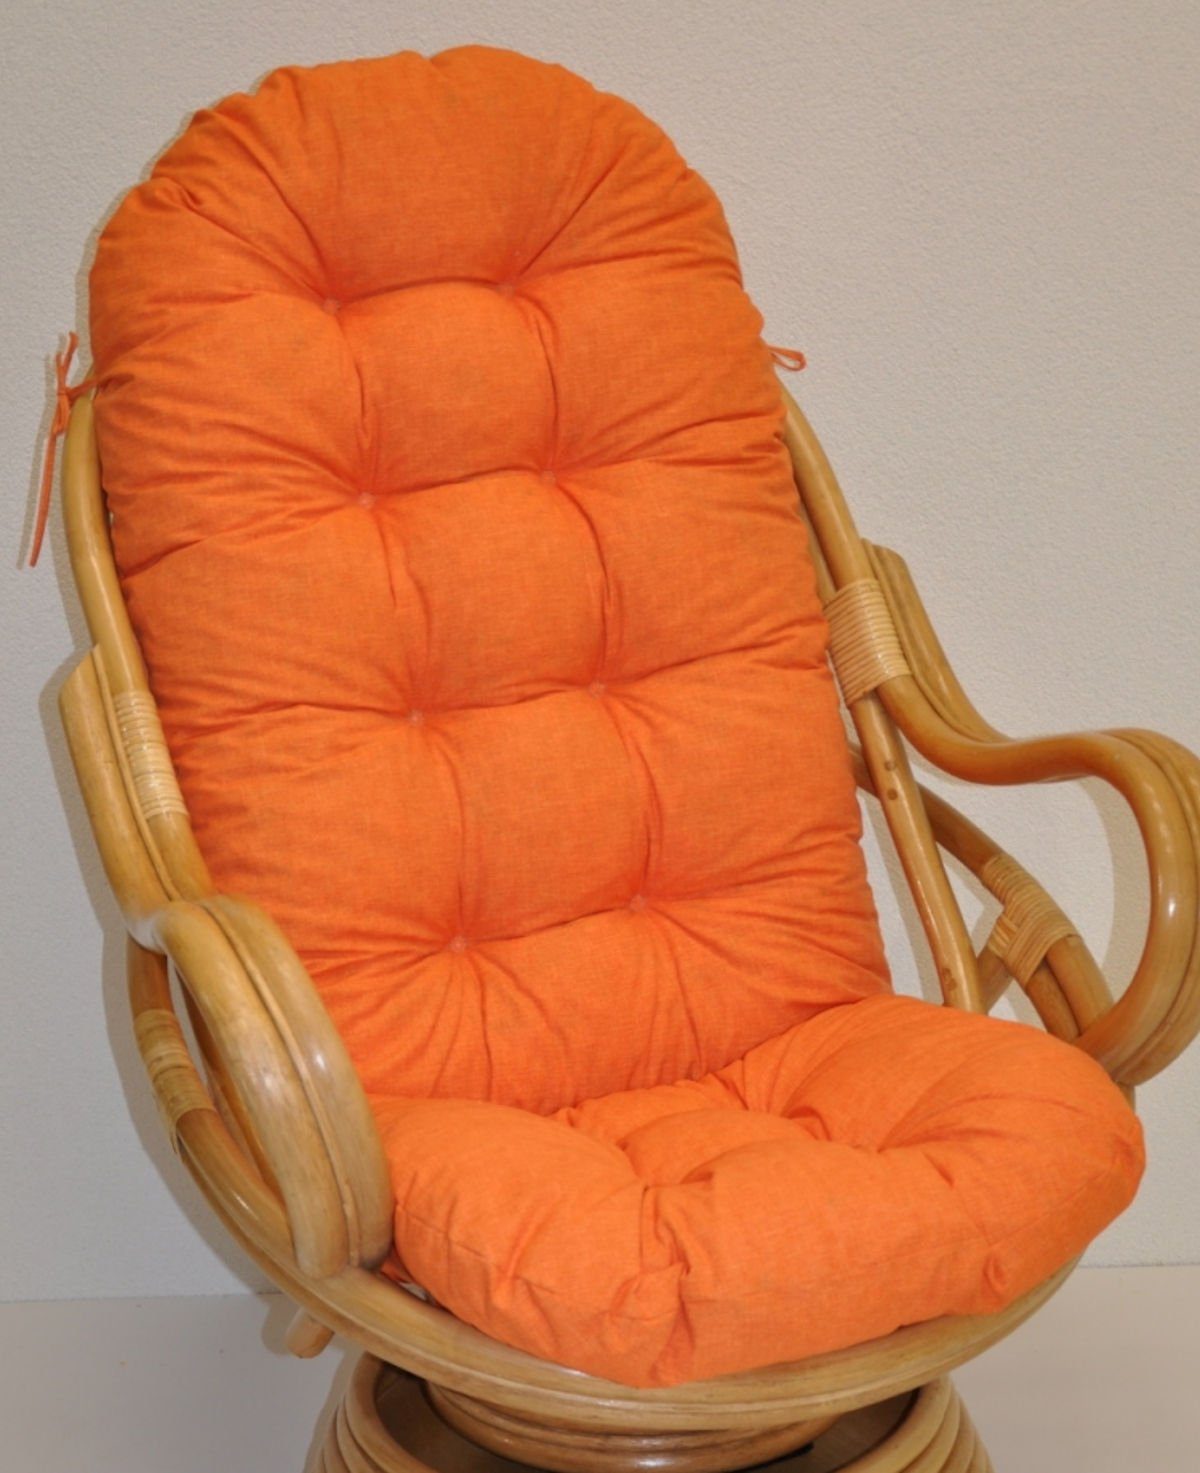 Rattani Sesselauflage Polster für Rattan Schaukelstuhl Drehsessel L 135 cm, Color orange | Sessel-Erhöhungen